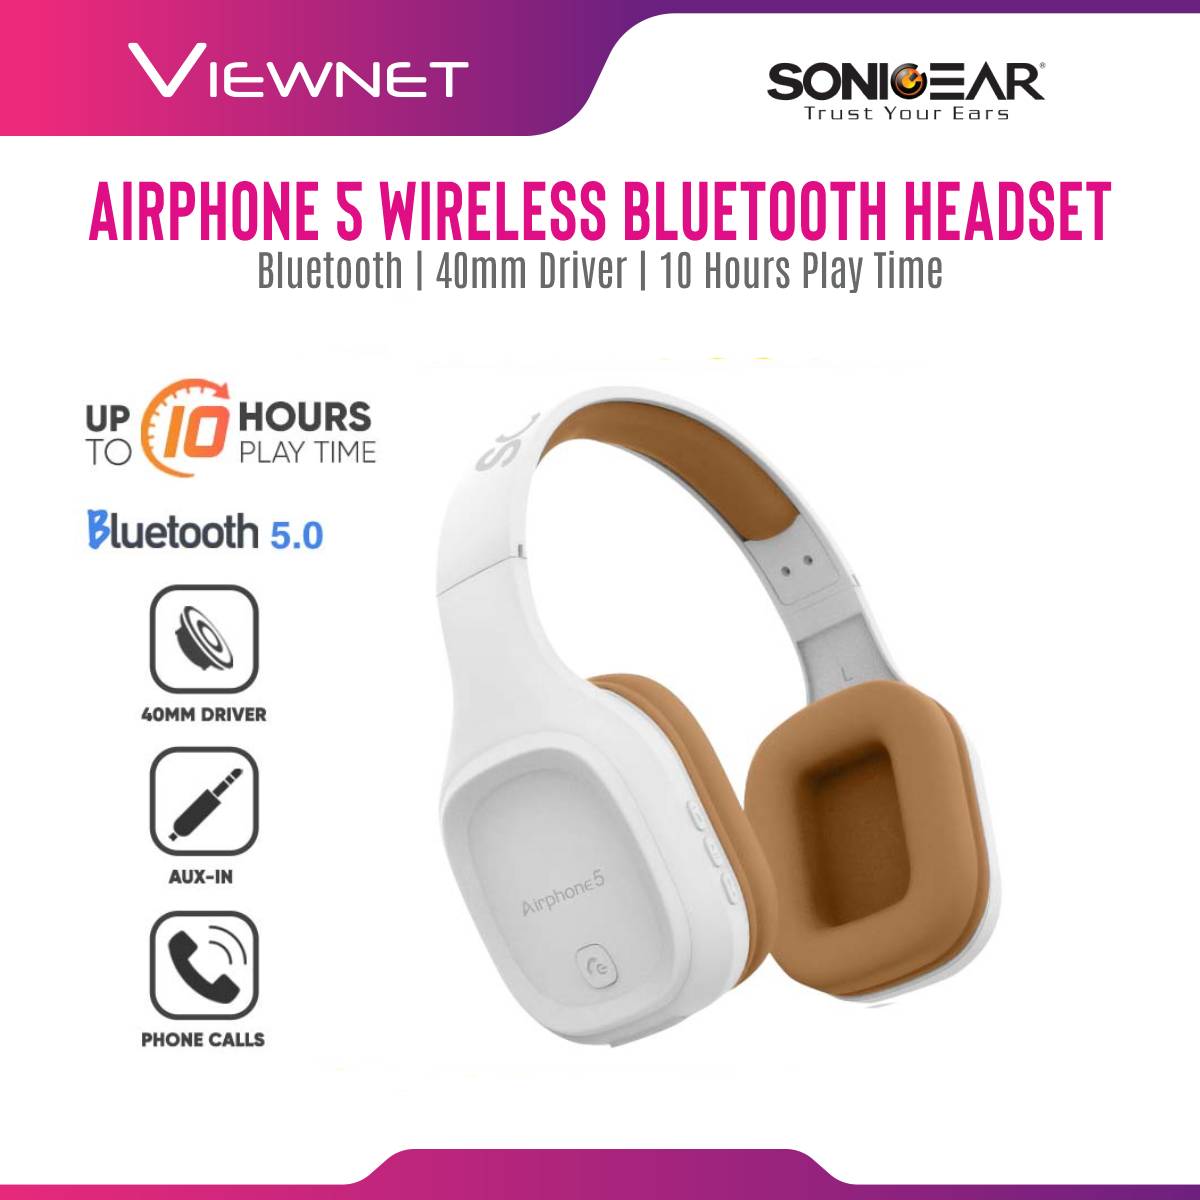 SonicGear Airphone 5 Wireless Bluetooth Headset